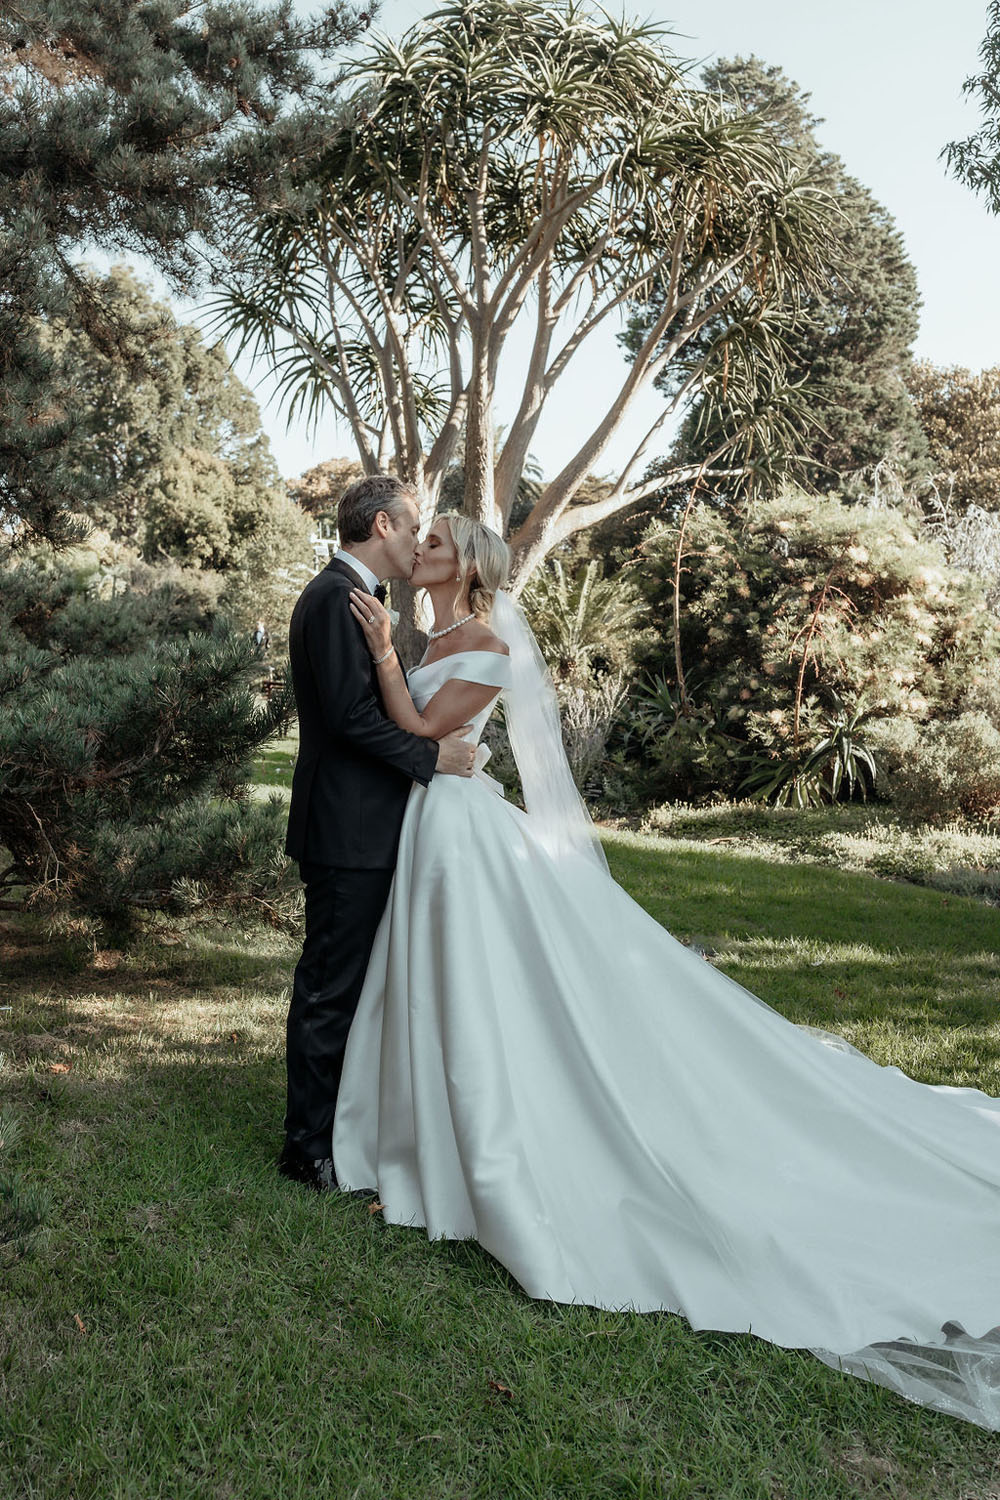 Australian entrepreneur Gretta van Riel’s classic white wedding